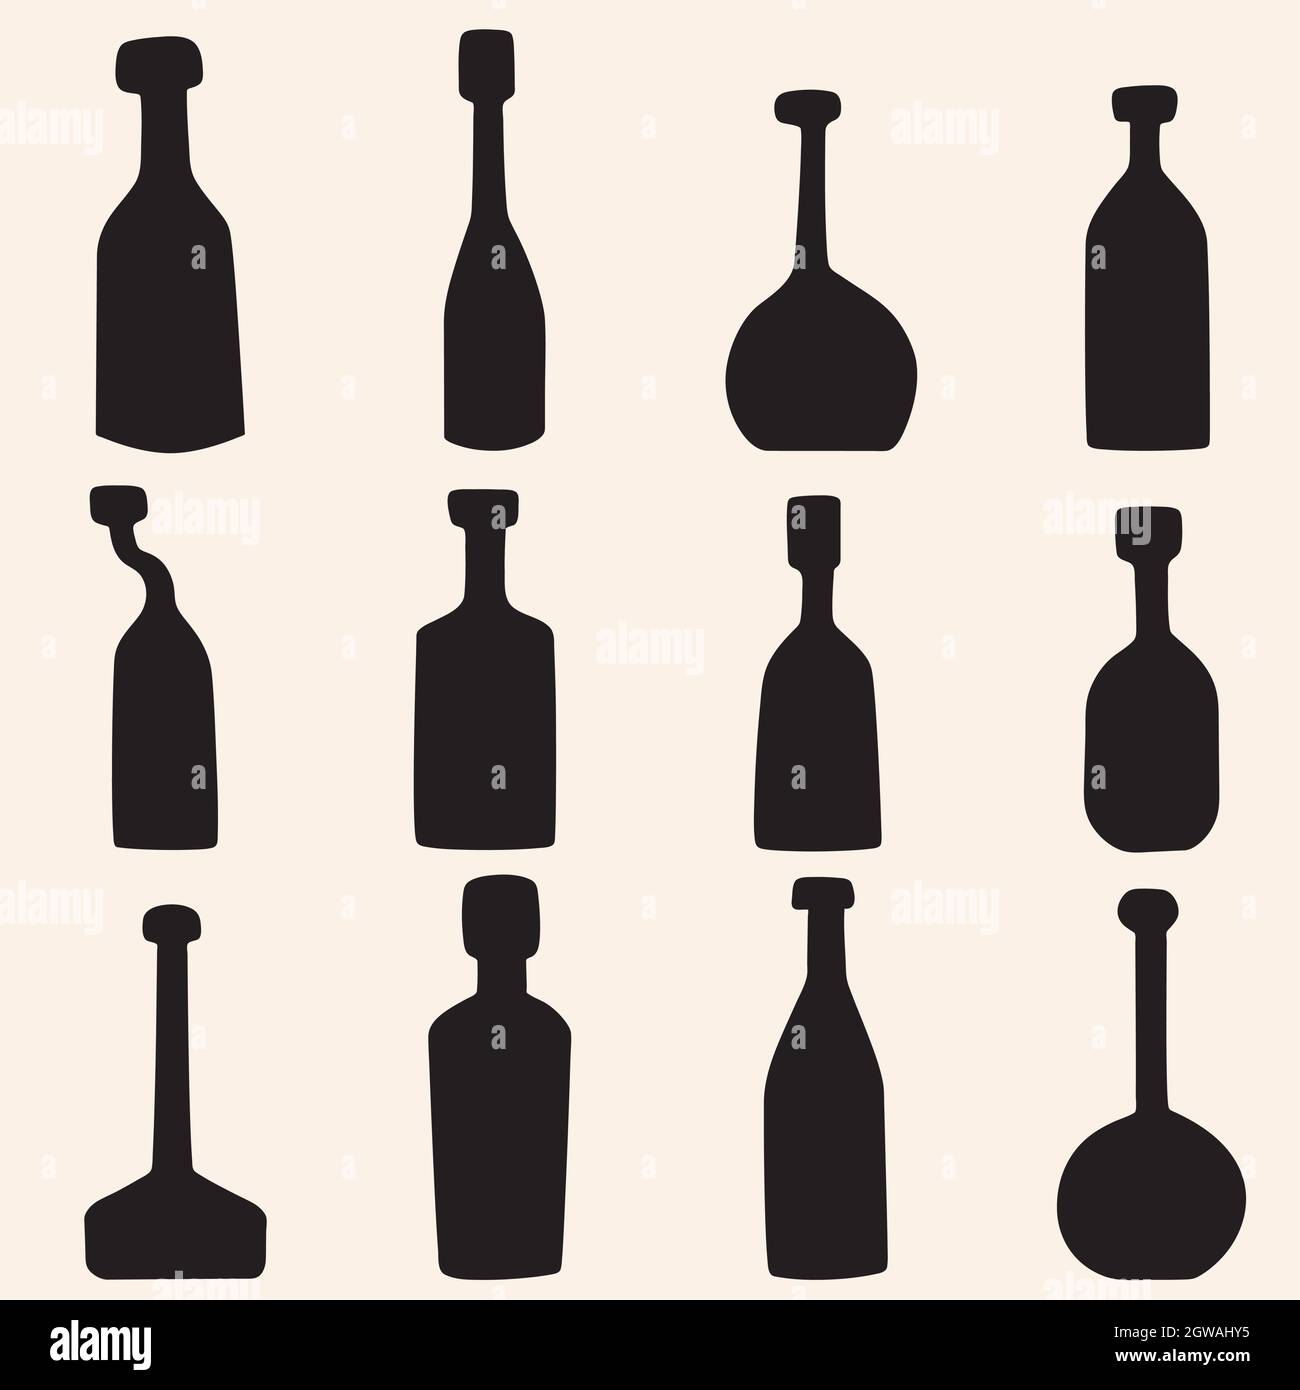 Hand Drawn Bottles. Potion vials, old medicine, unique apothecary flasks, vintage wine bottles. Black Silhouette. Stock Vector